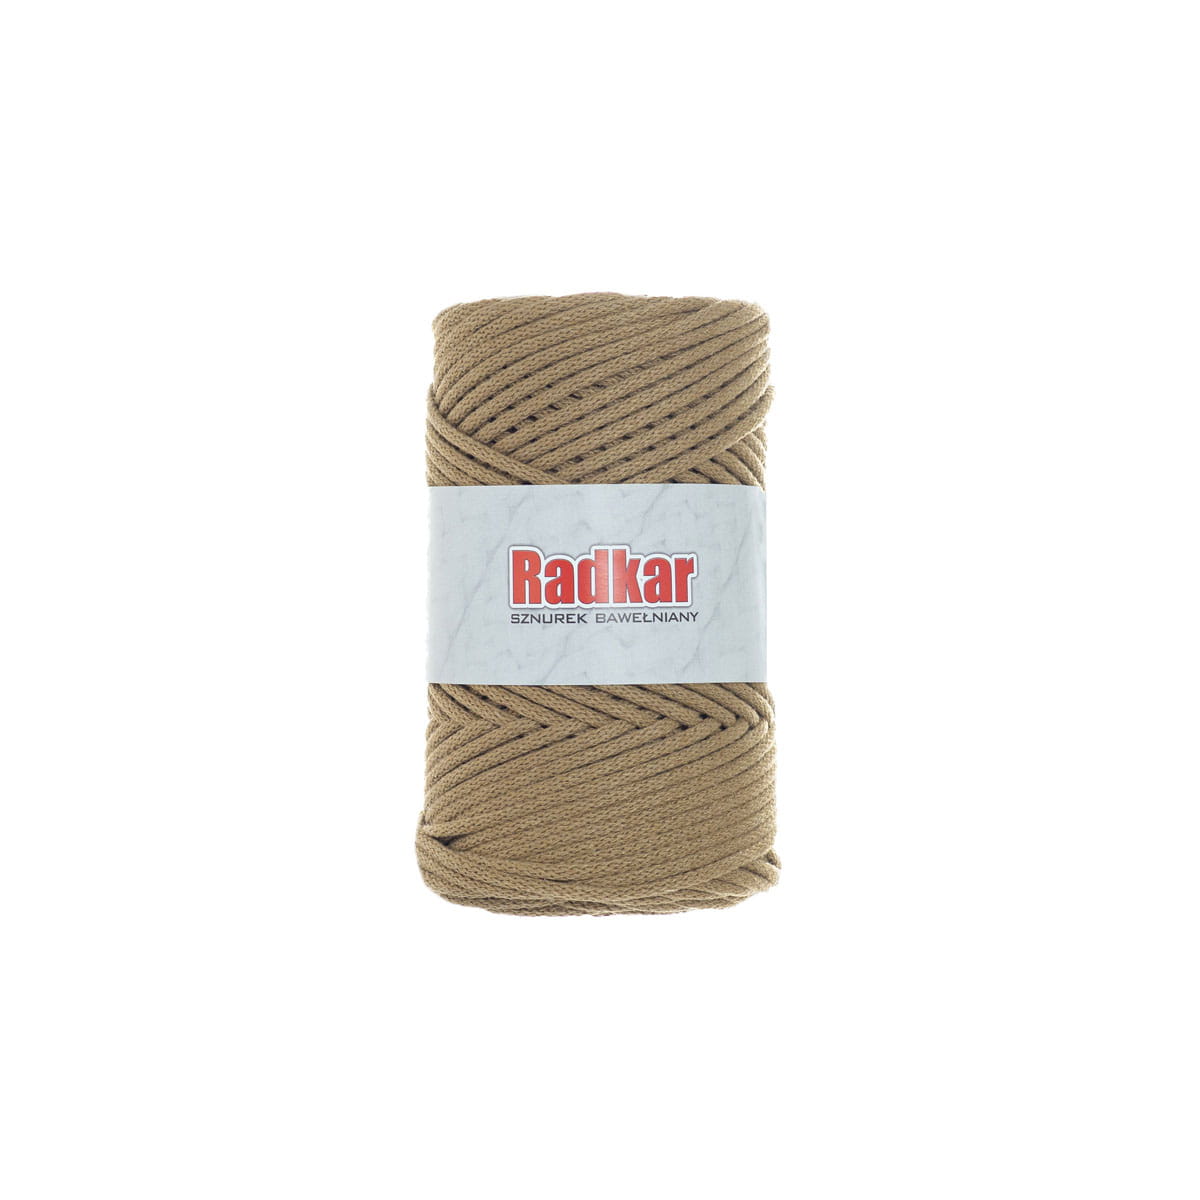 Caramel 705 3mm cotton cord